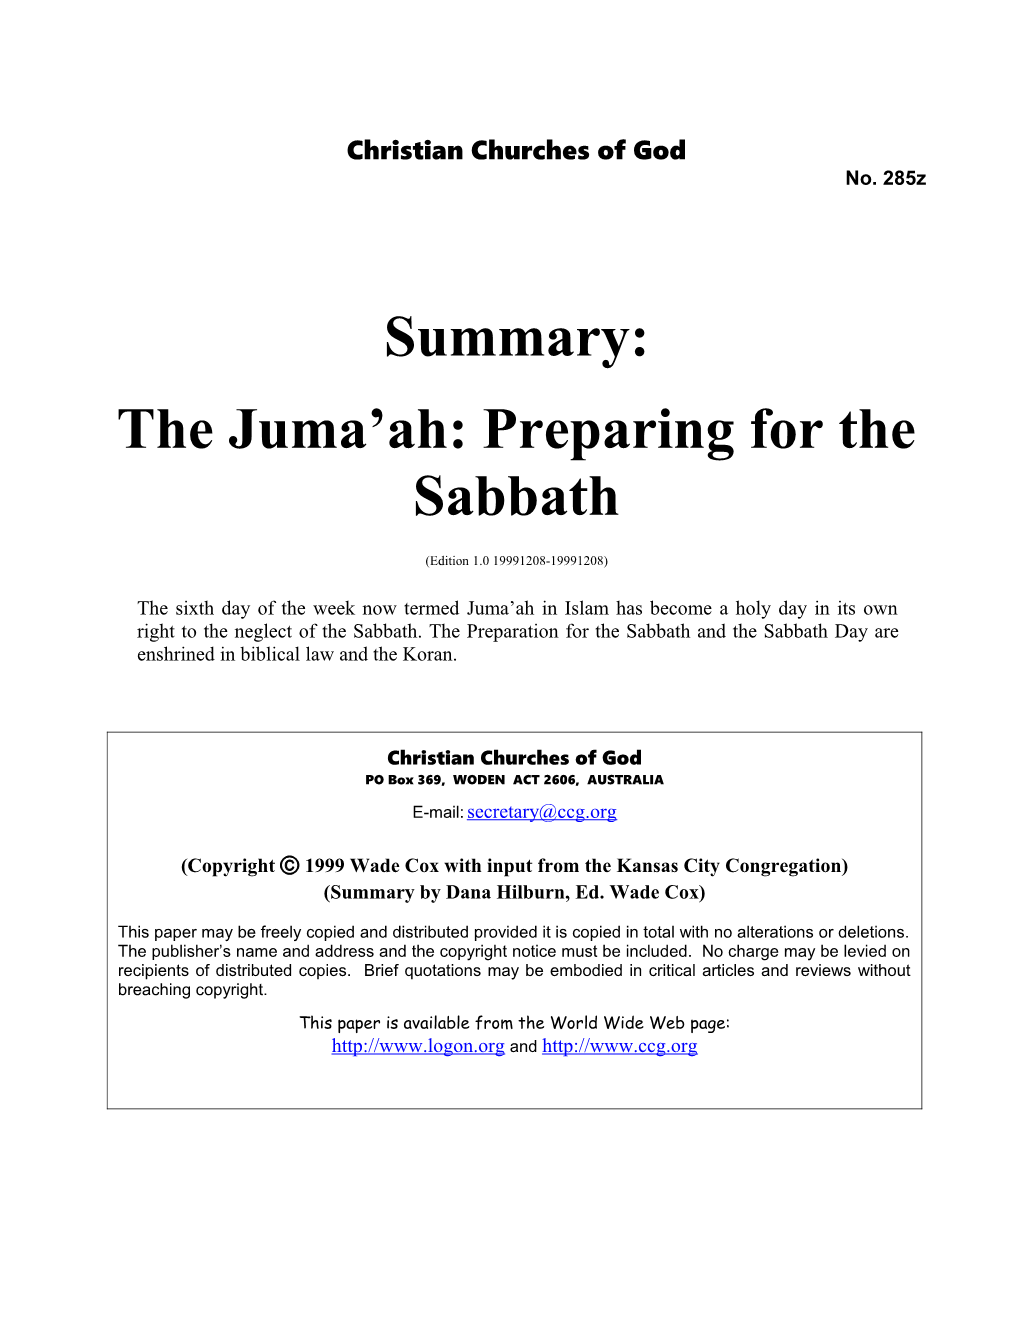 Summary: the Juma'ah: Preparing for the Sabbath (No. 285Z)